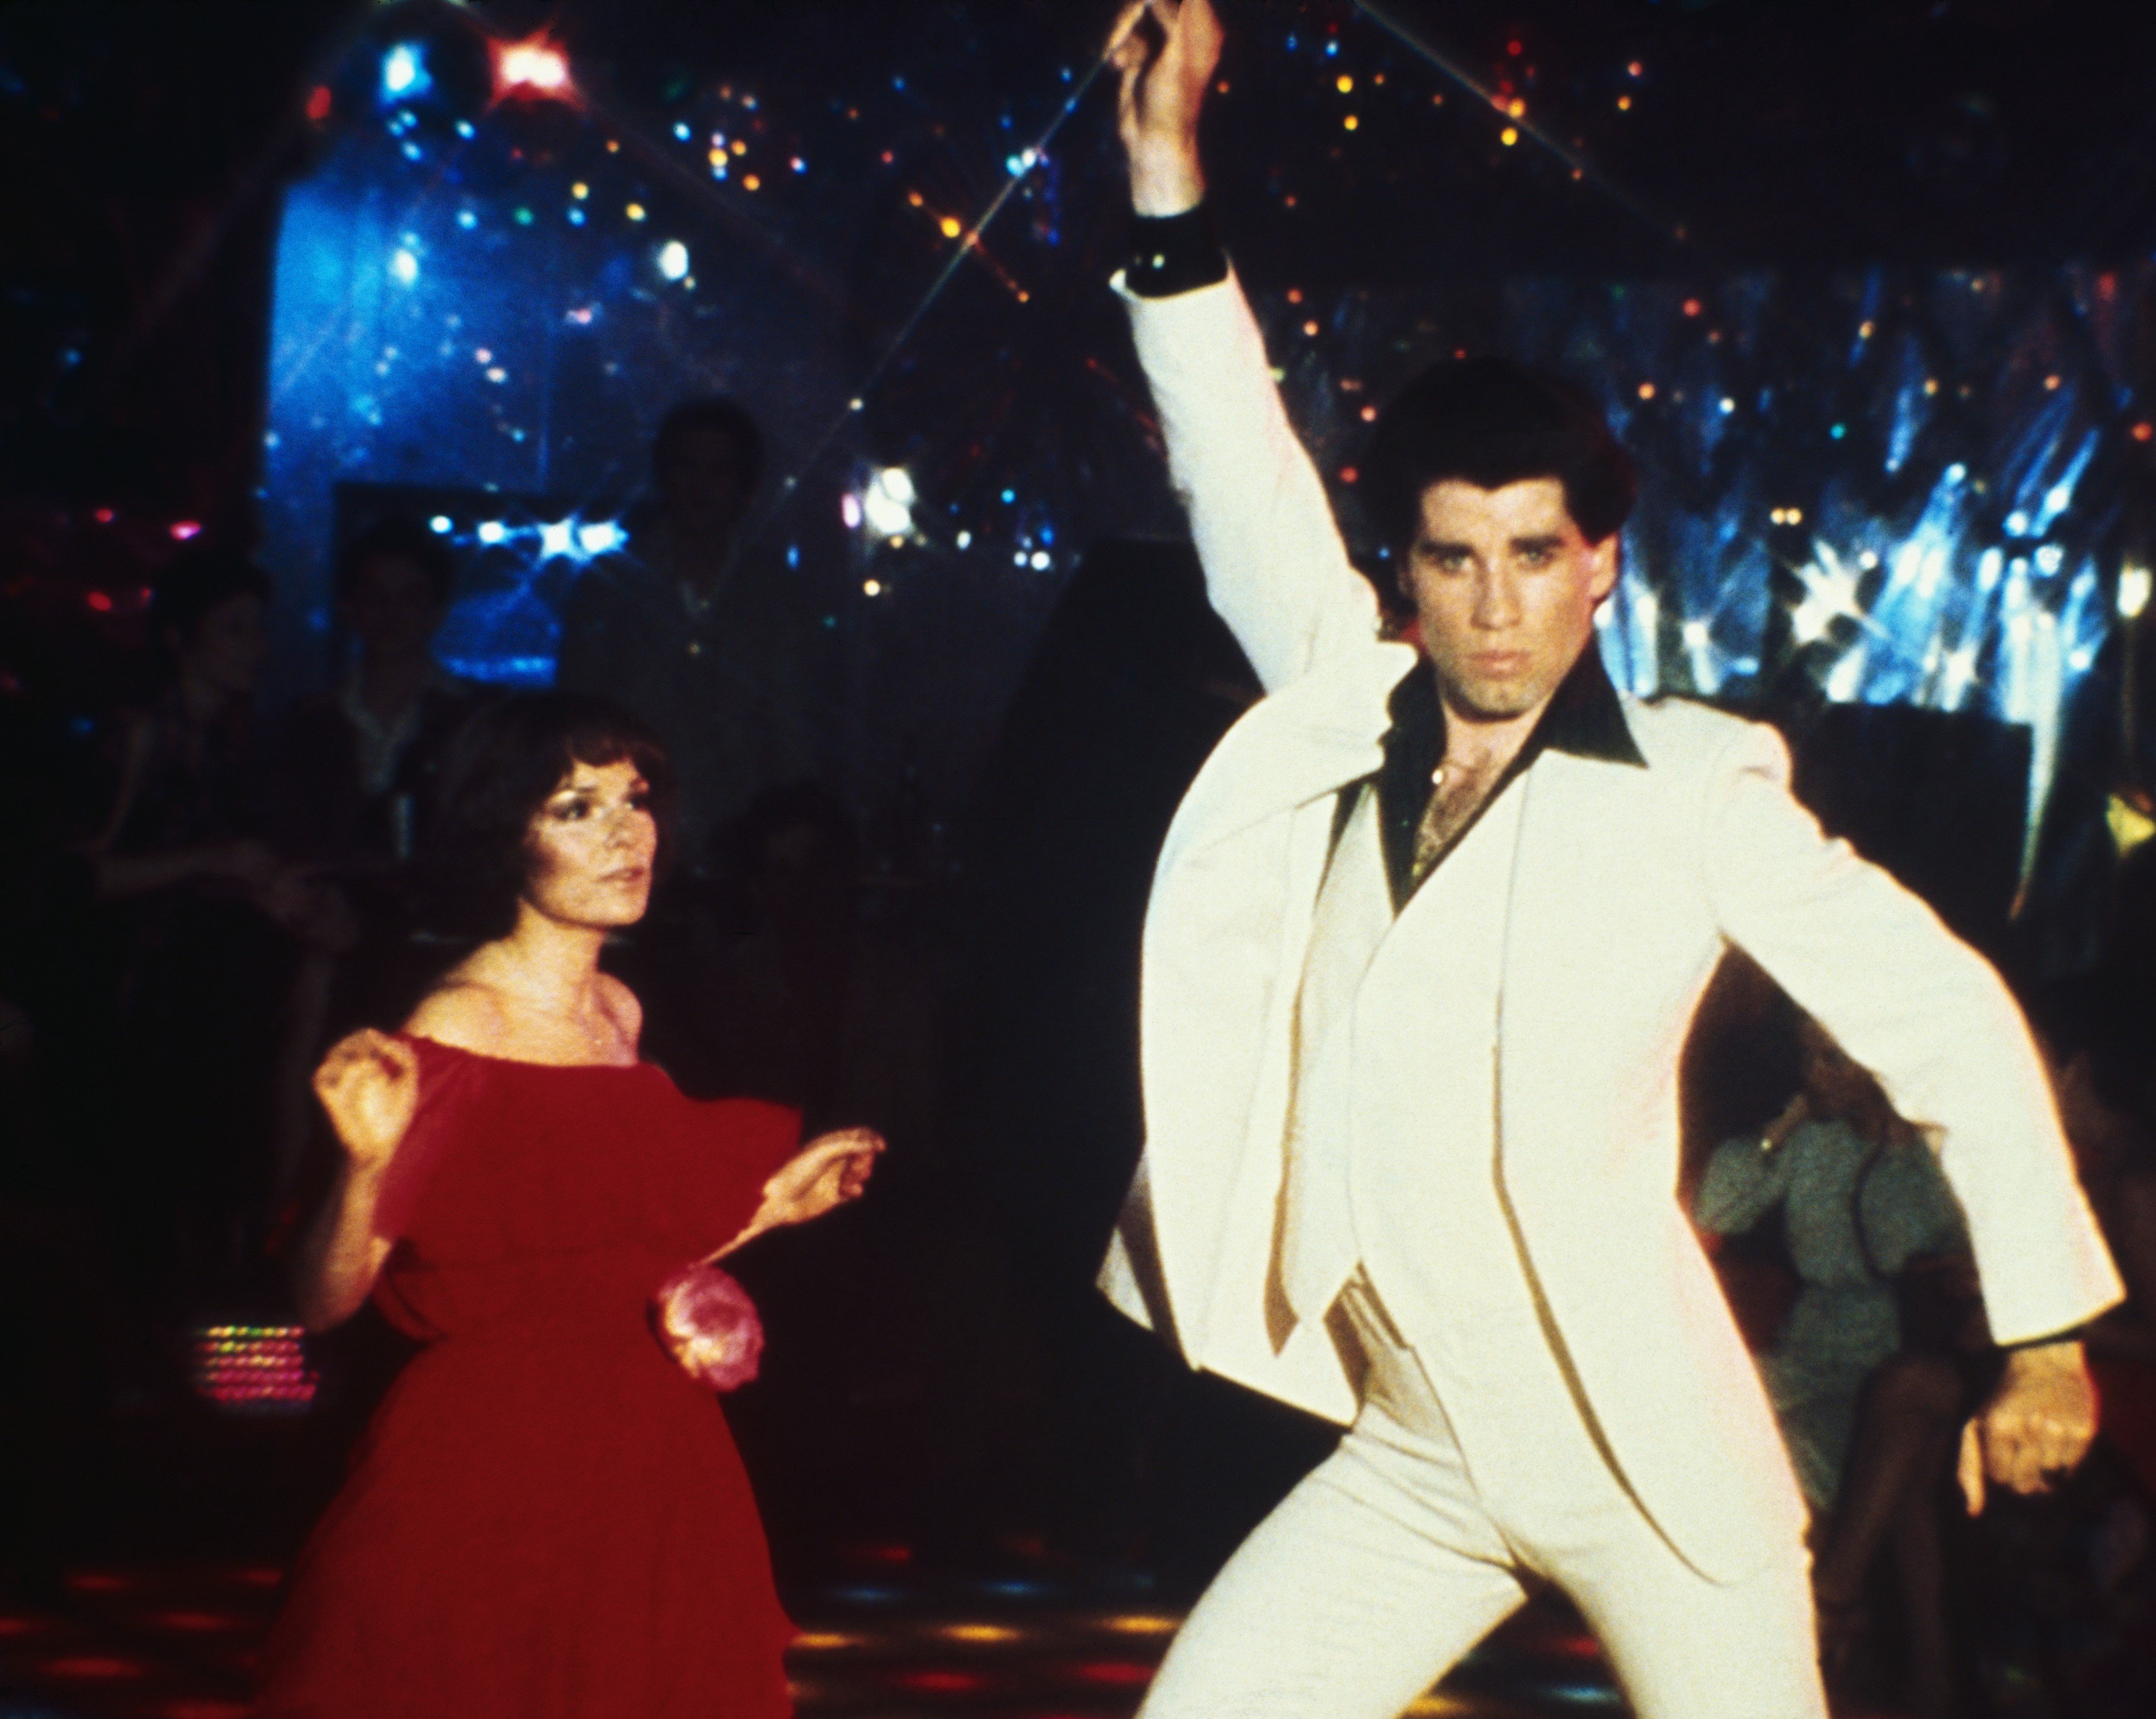 Karen Lynn Gorney and John Travolta in a promotional image for 'Saturday Night Fever'